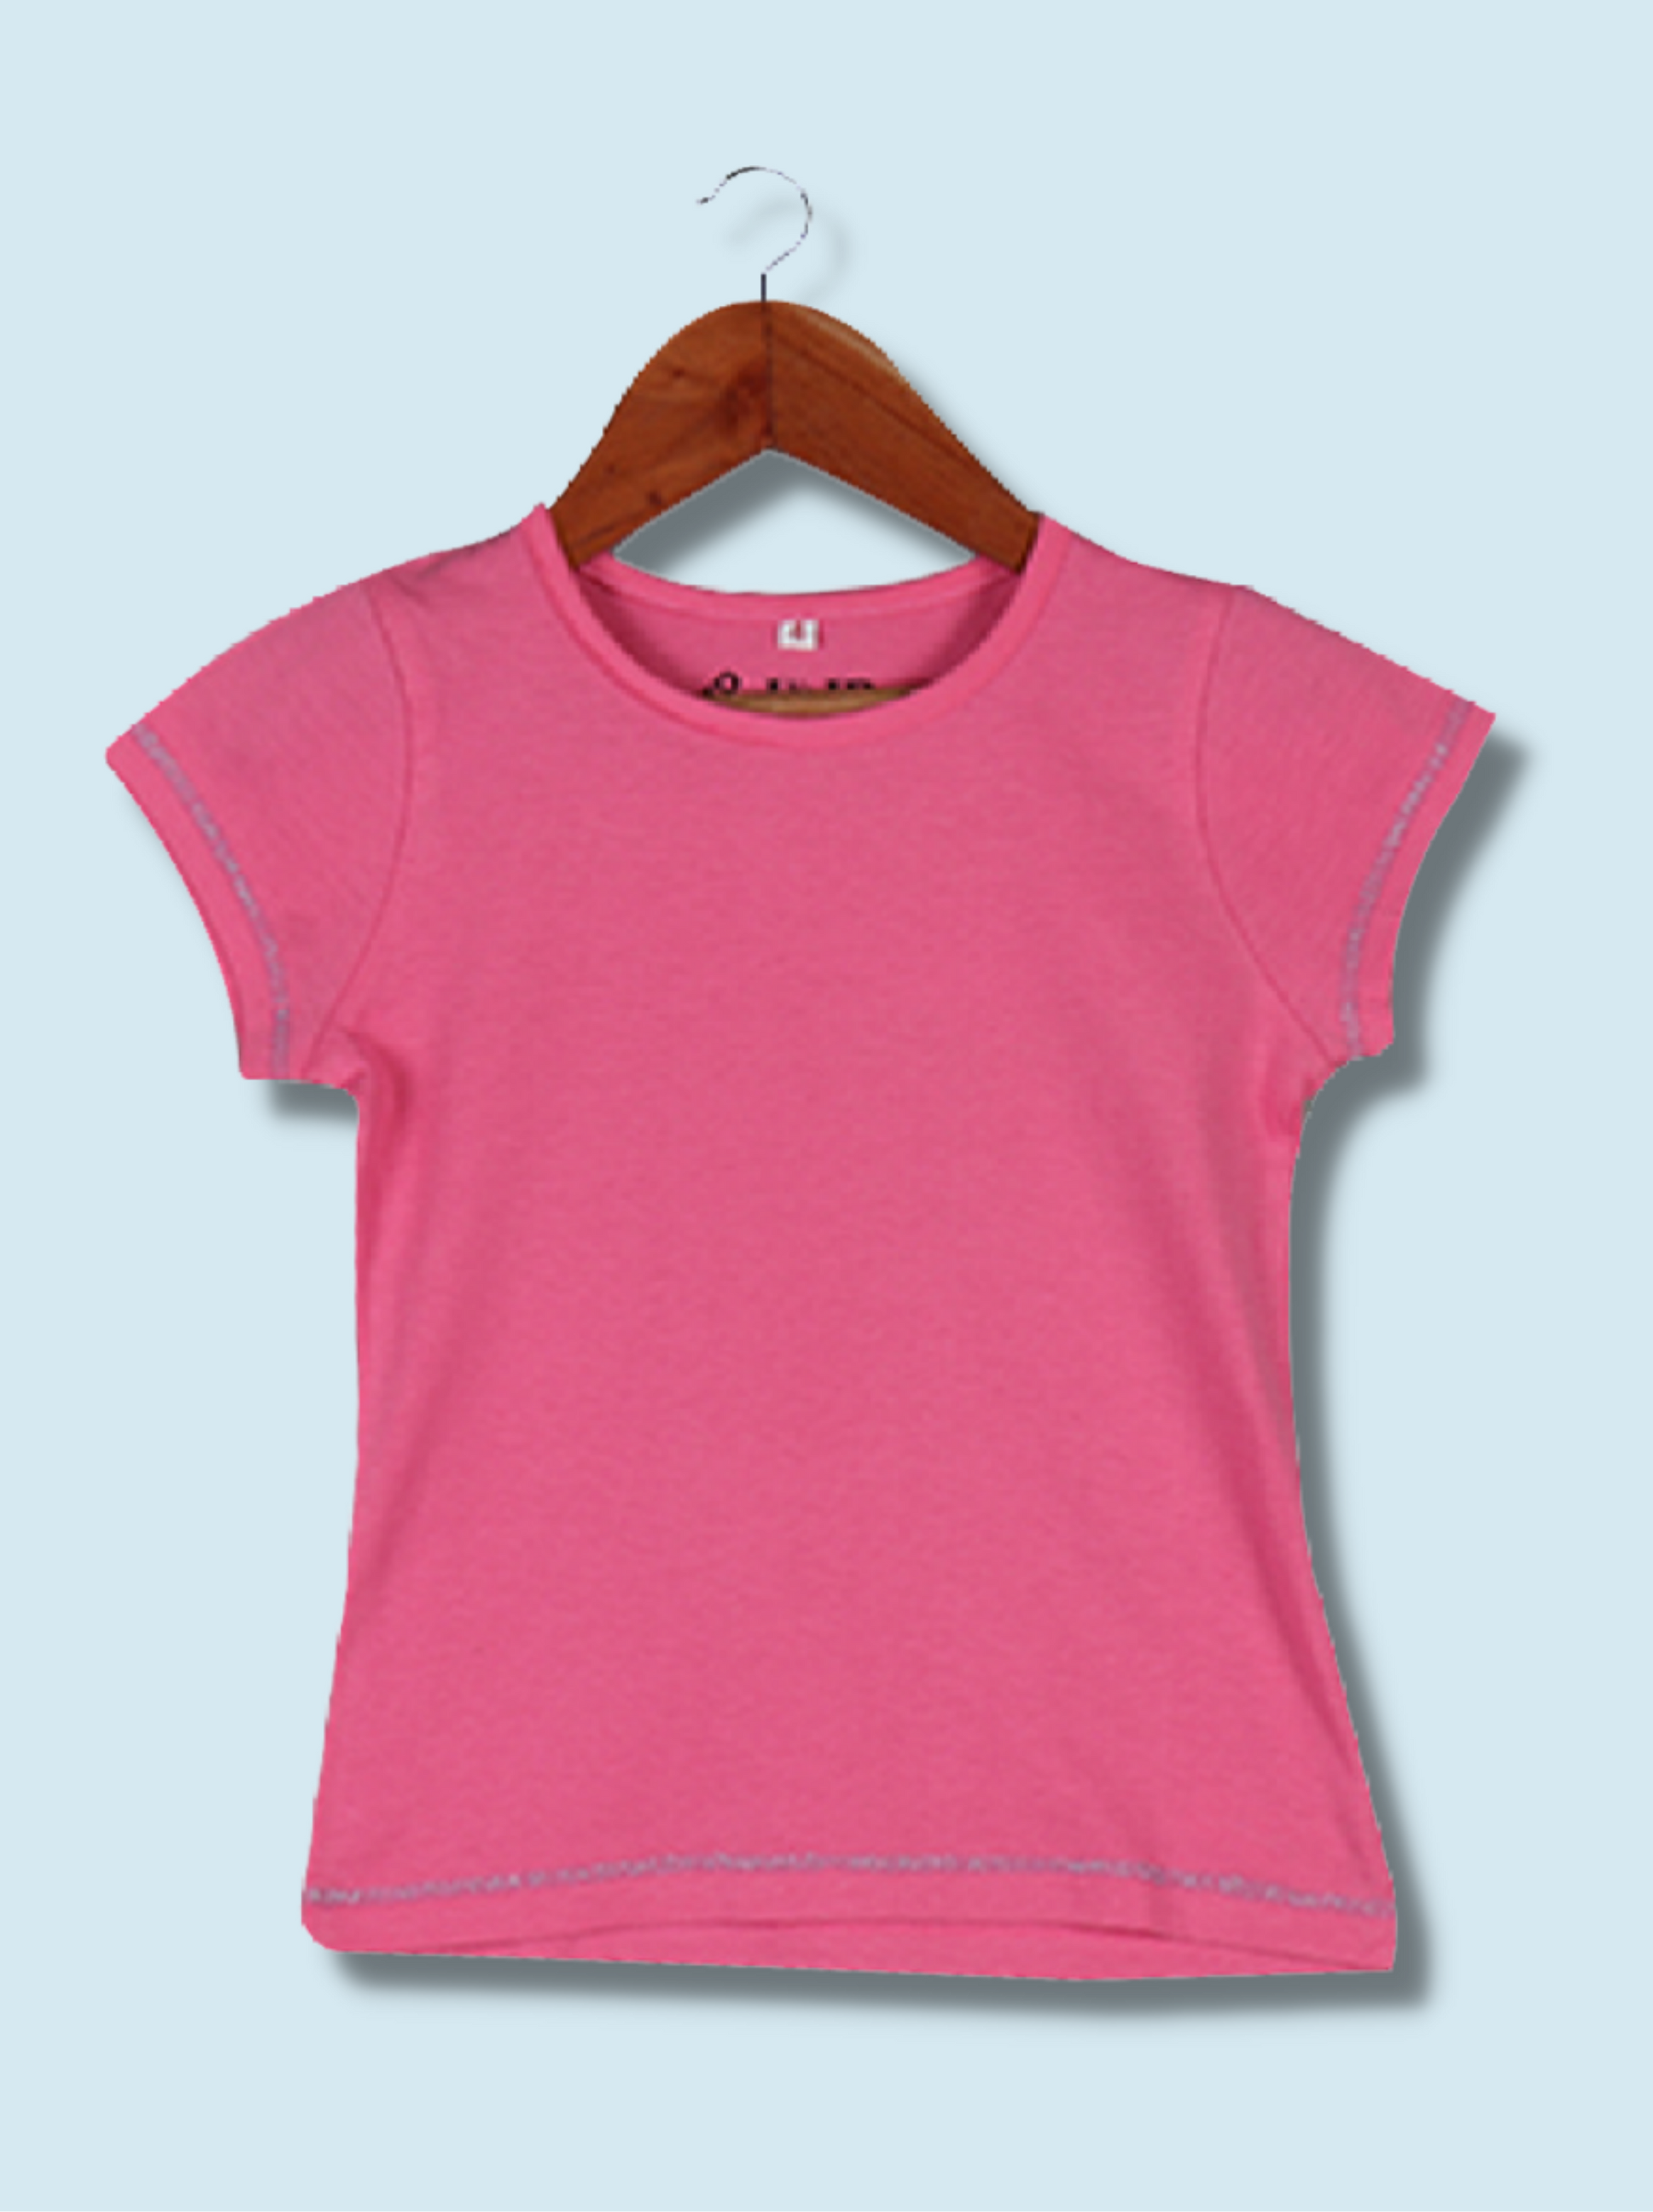 Kids Pink Half sleeve Solid Cotton jersey knit T-Shirt